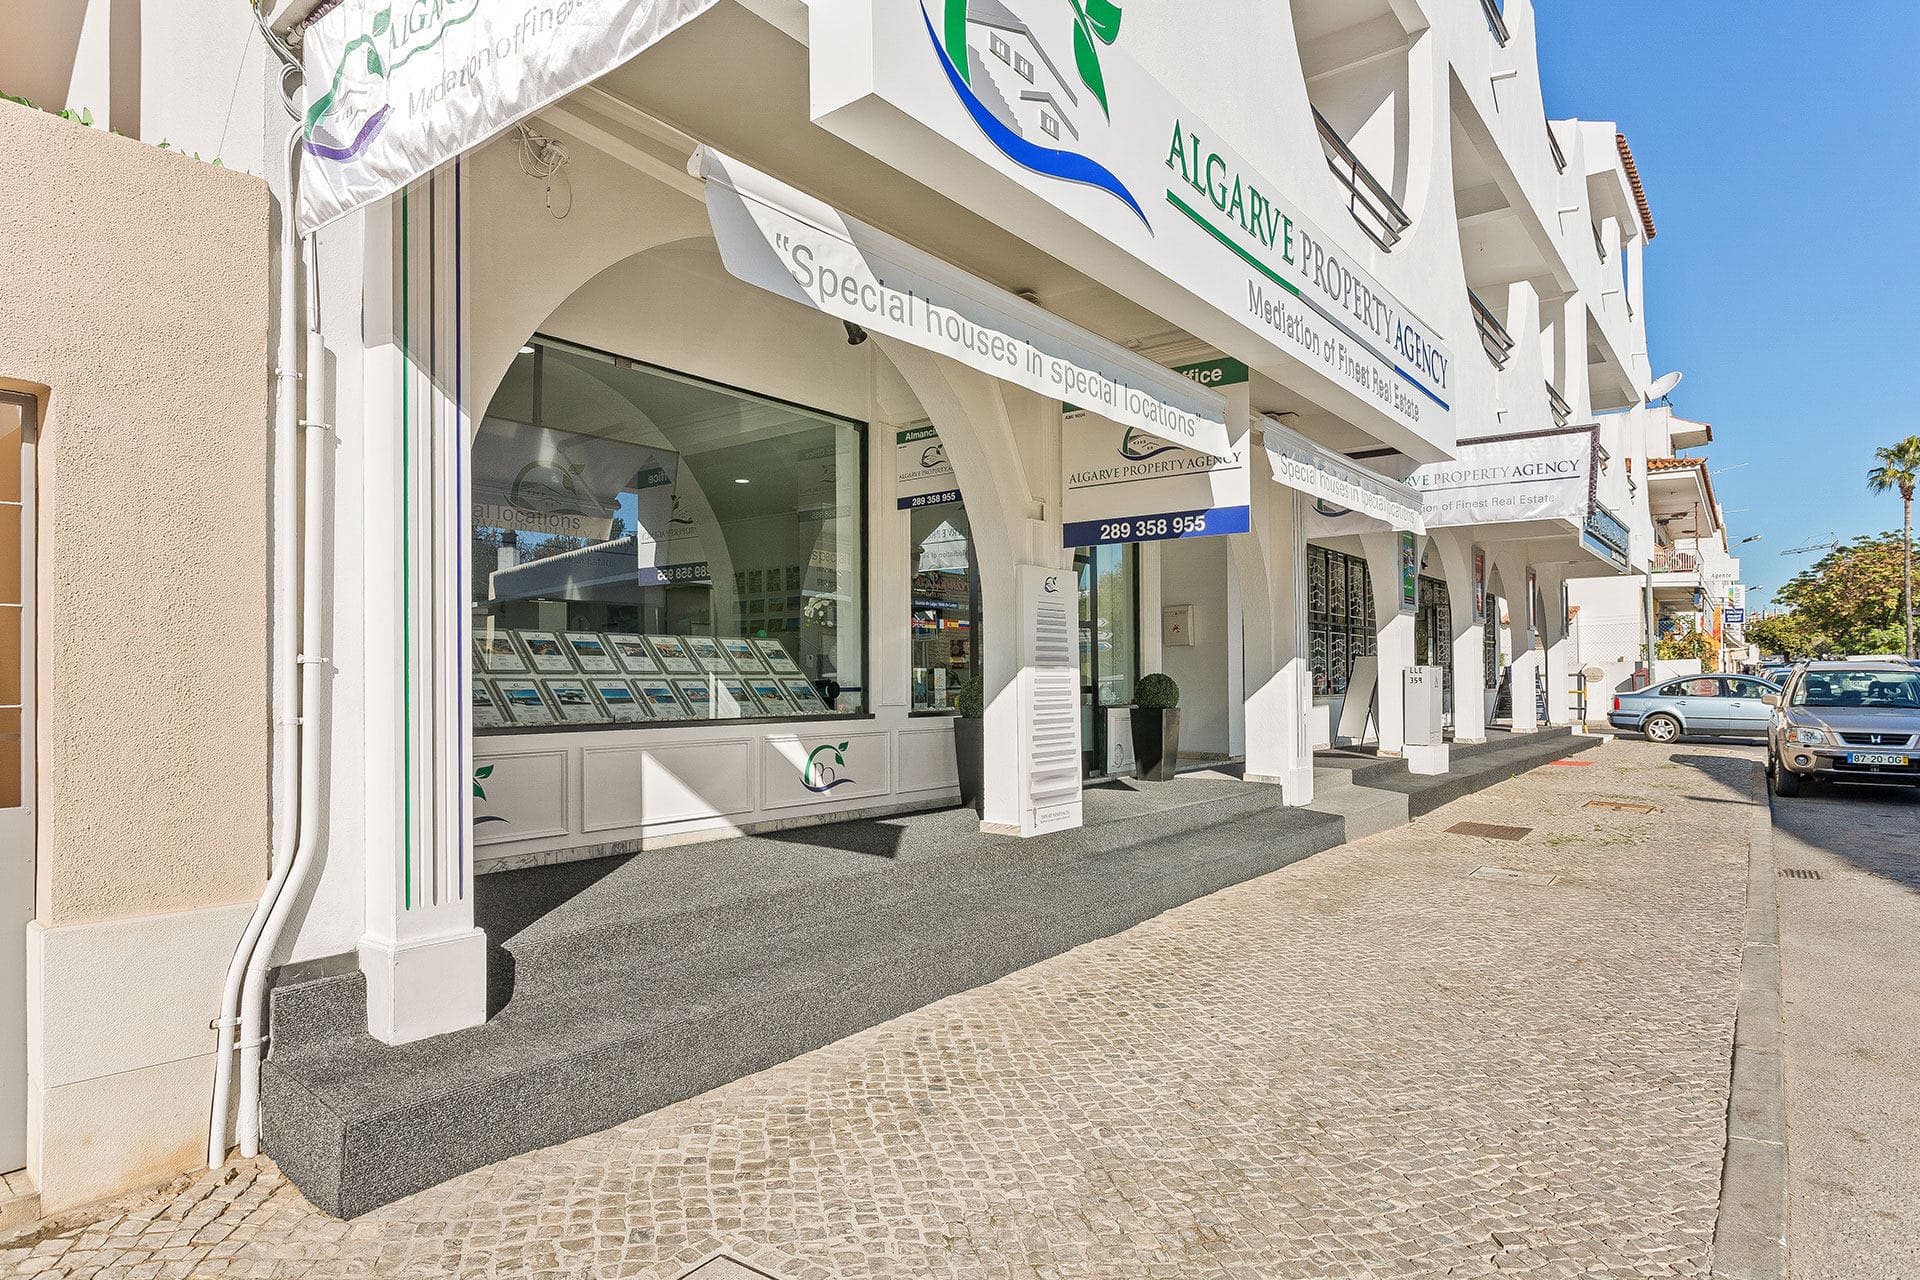 Algarve Property Agency